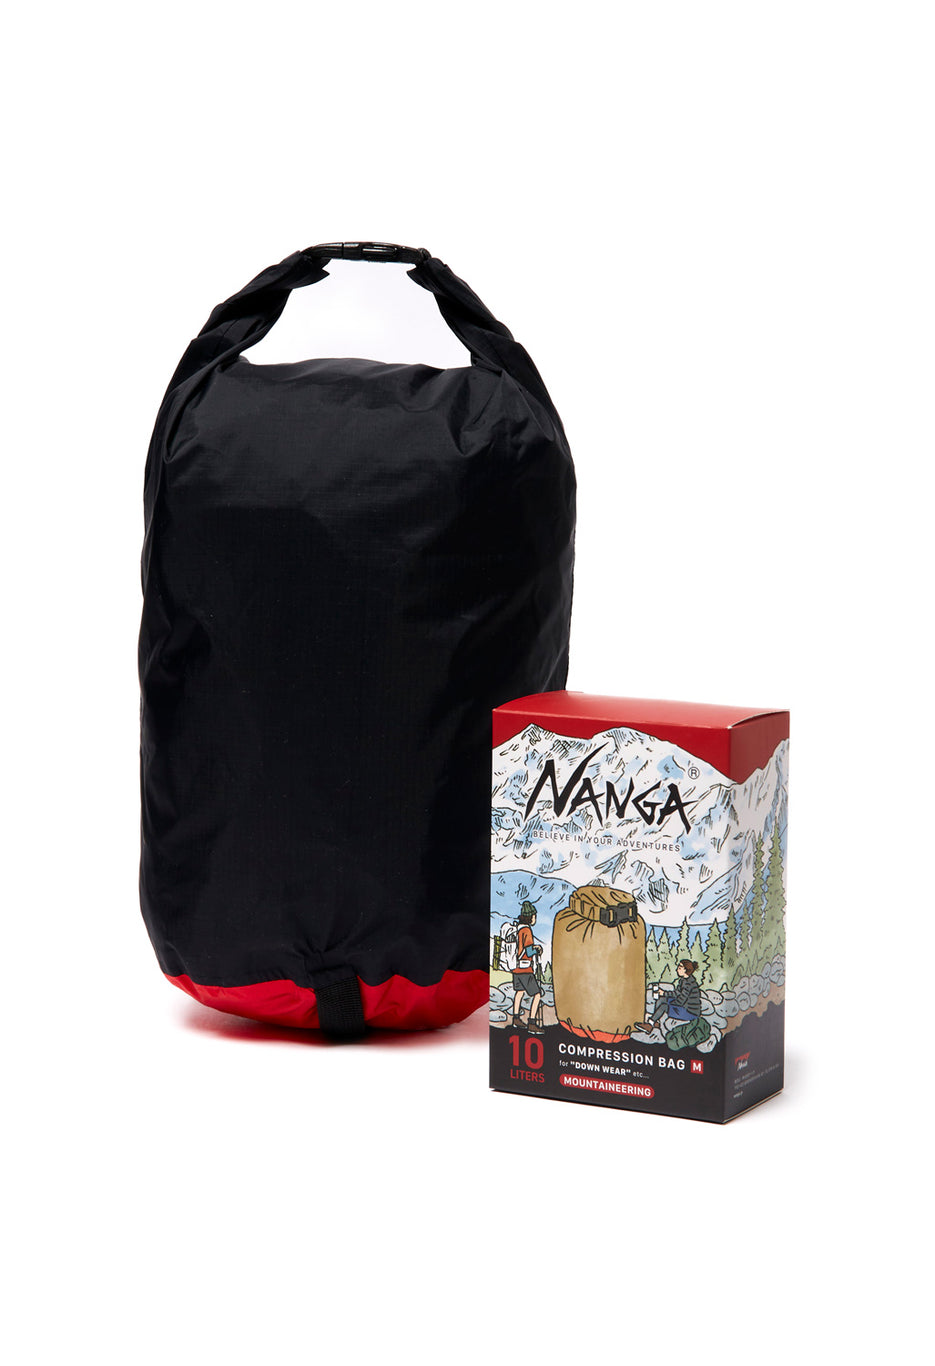 Nanga Compression Bag Medium 1